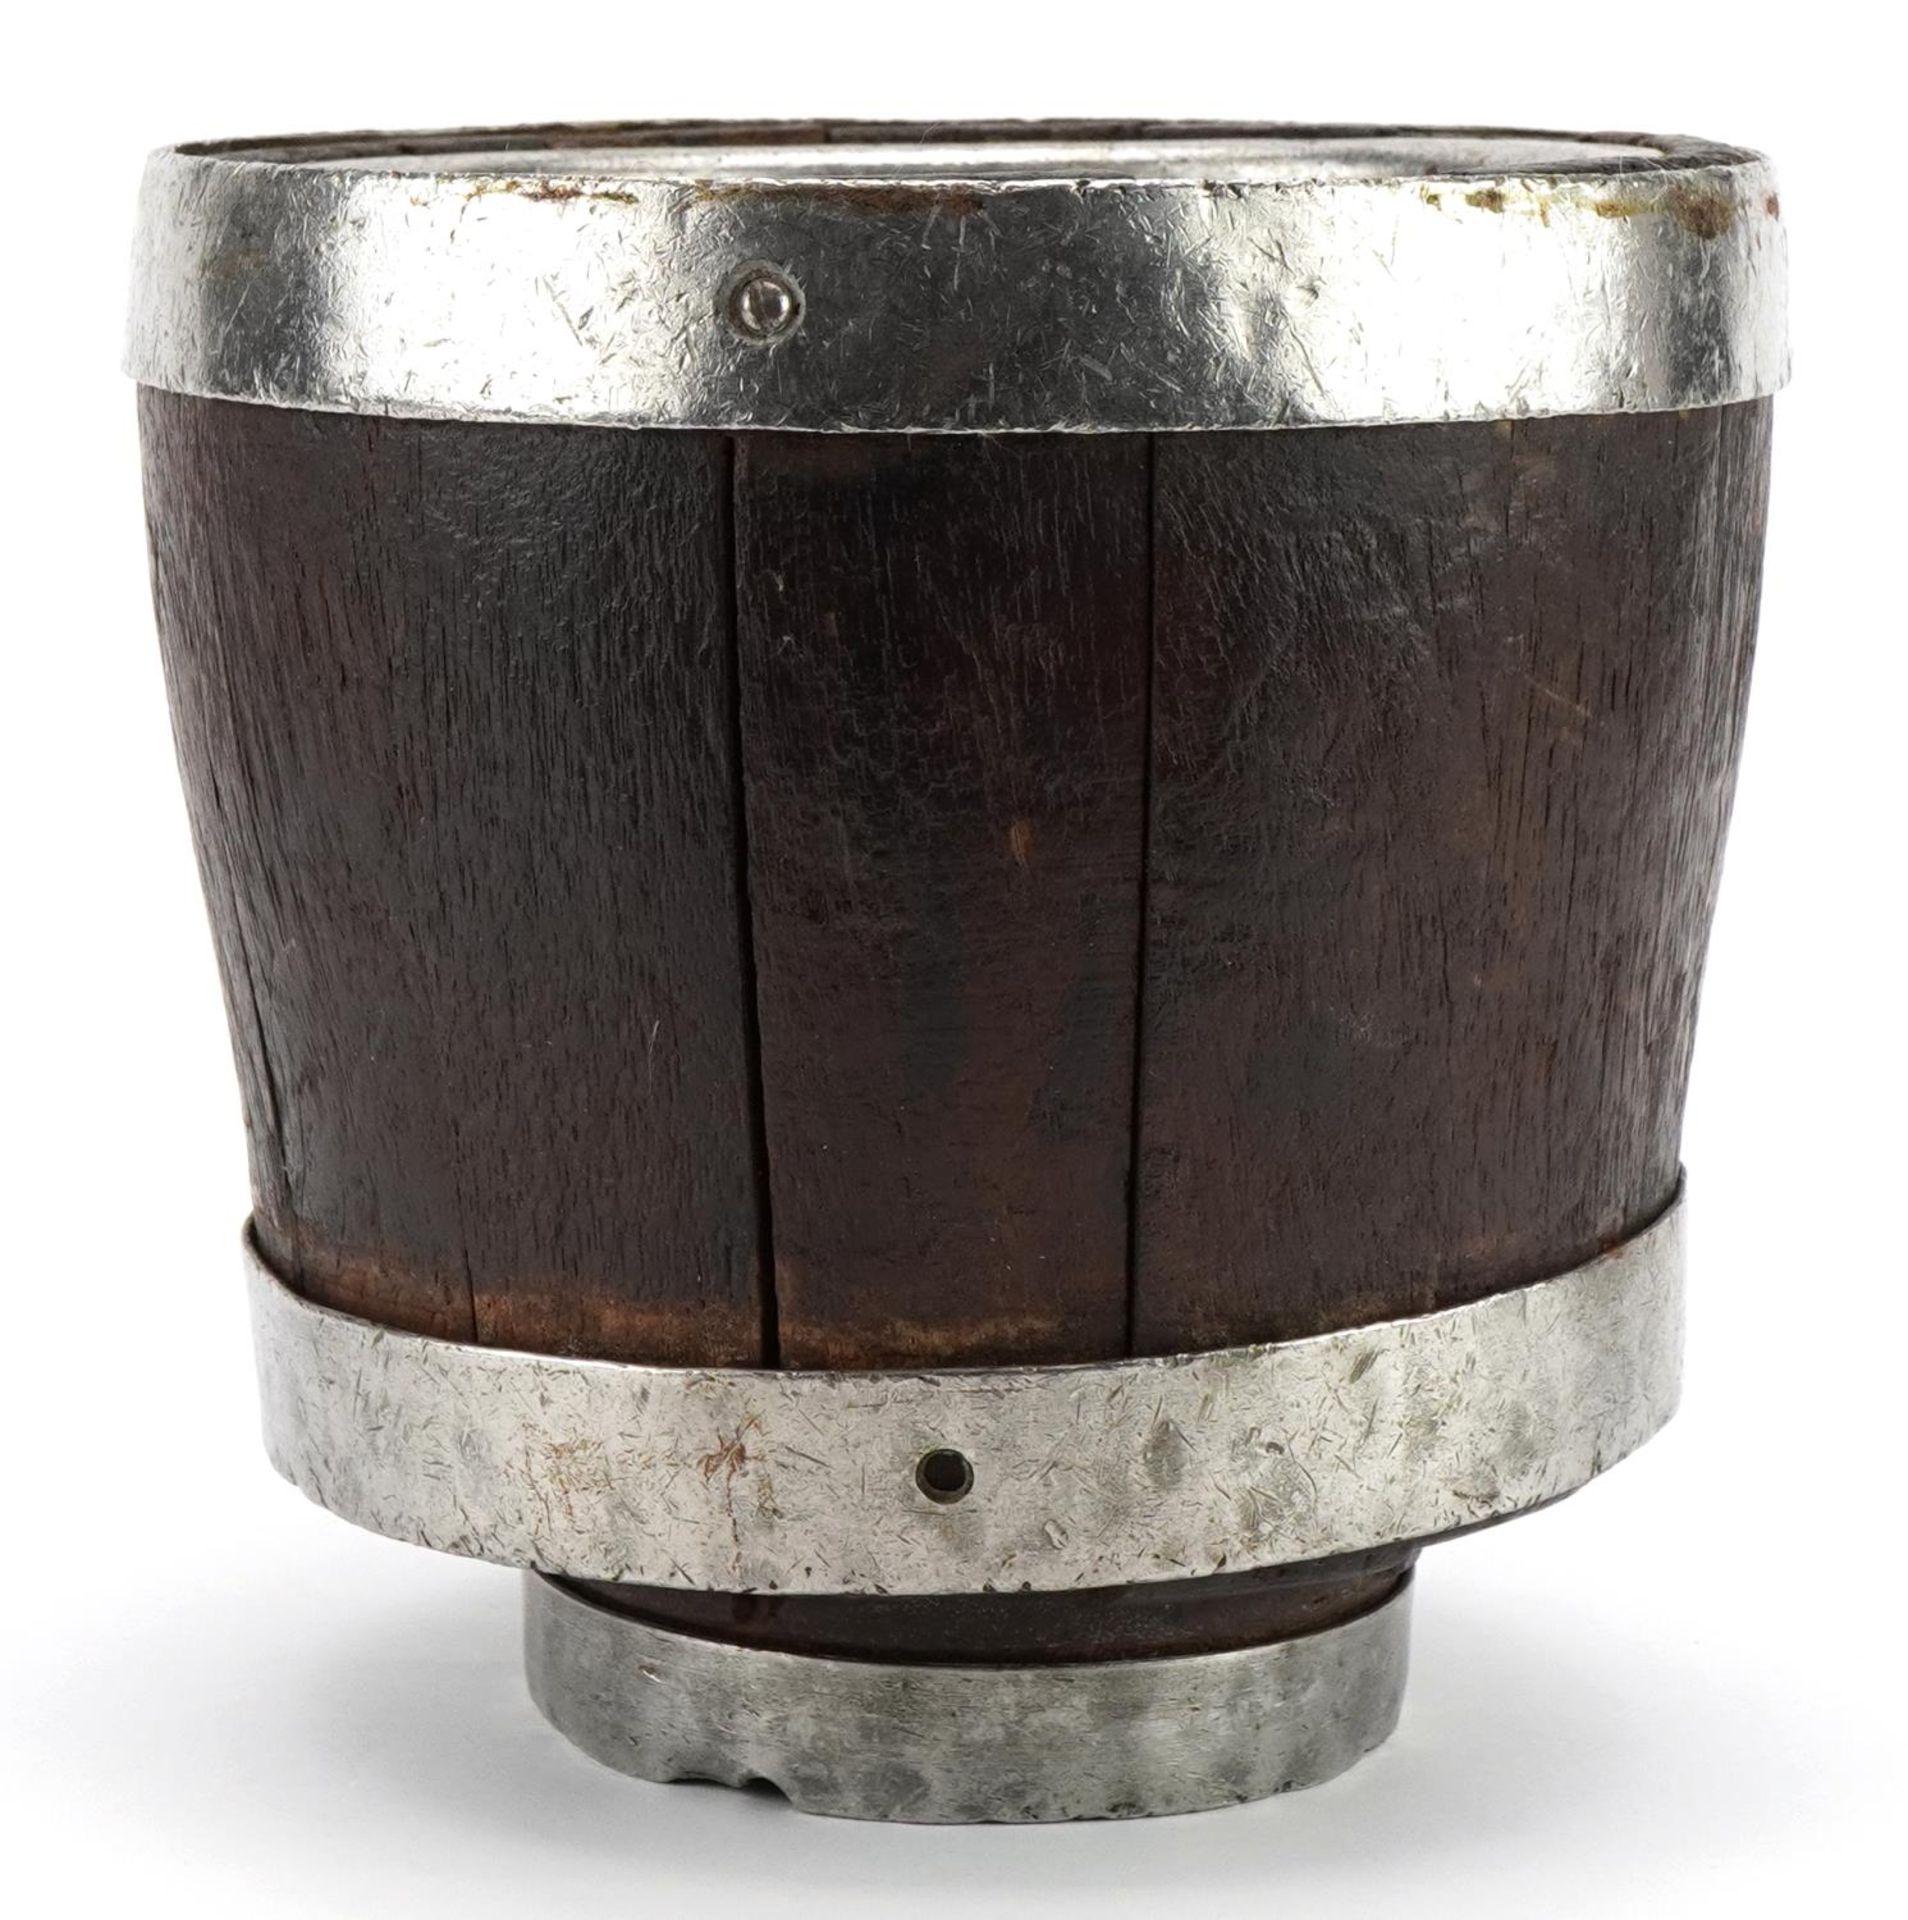 Antique oak and coconut metal bound barrel planter, 19cm high x 19cm in diameter - Bild 2 aus 3